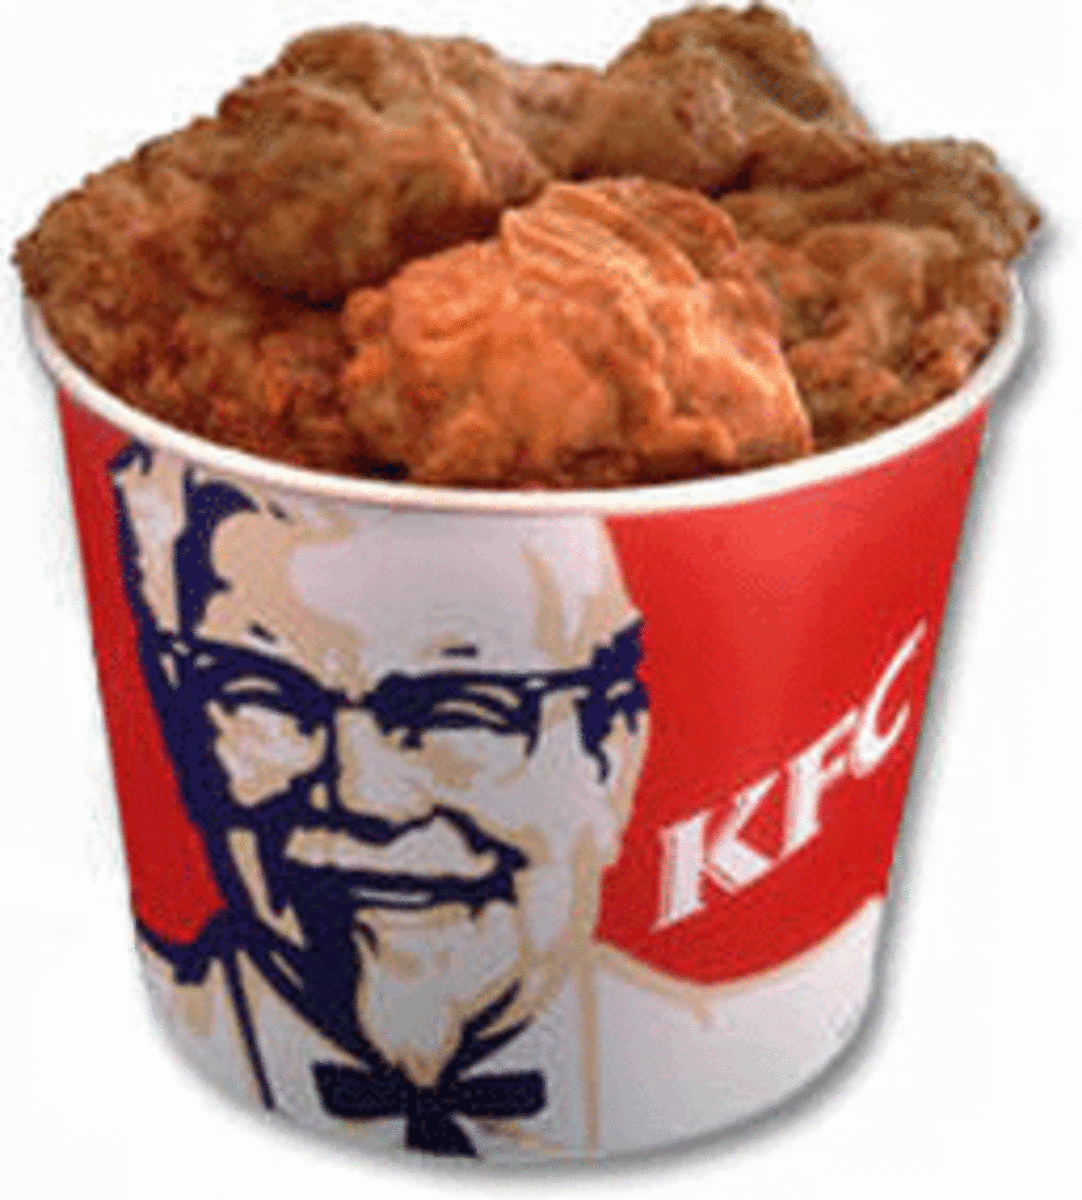 KFC bucket meal